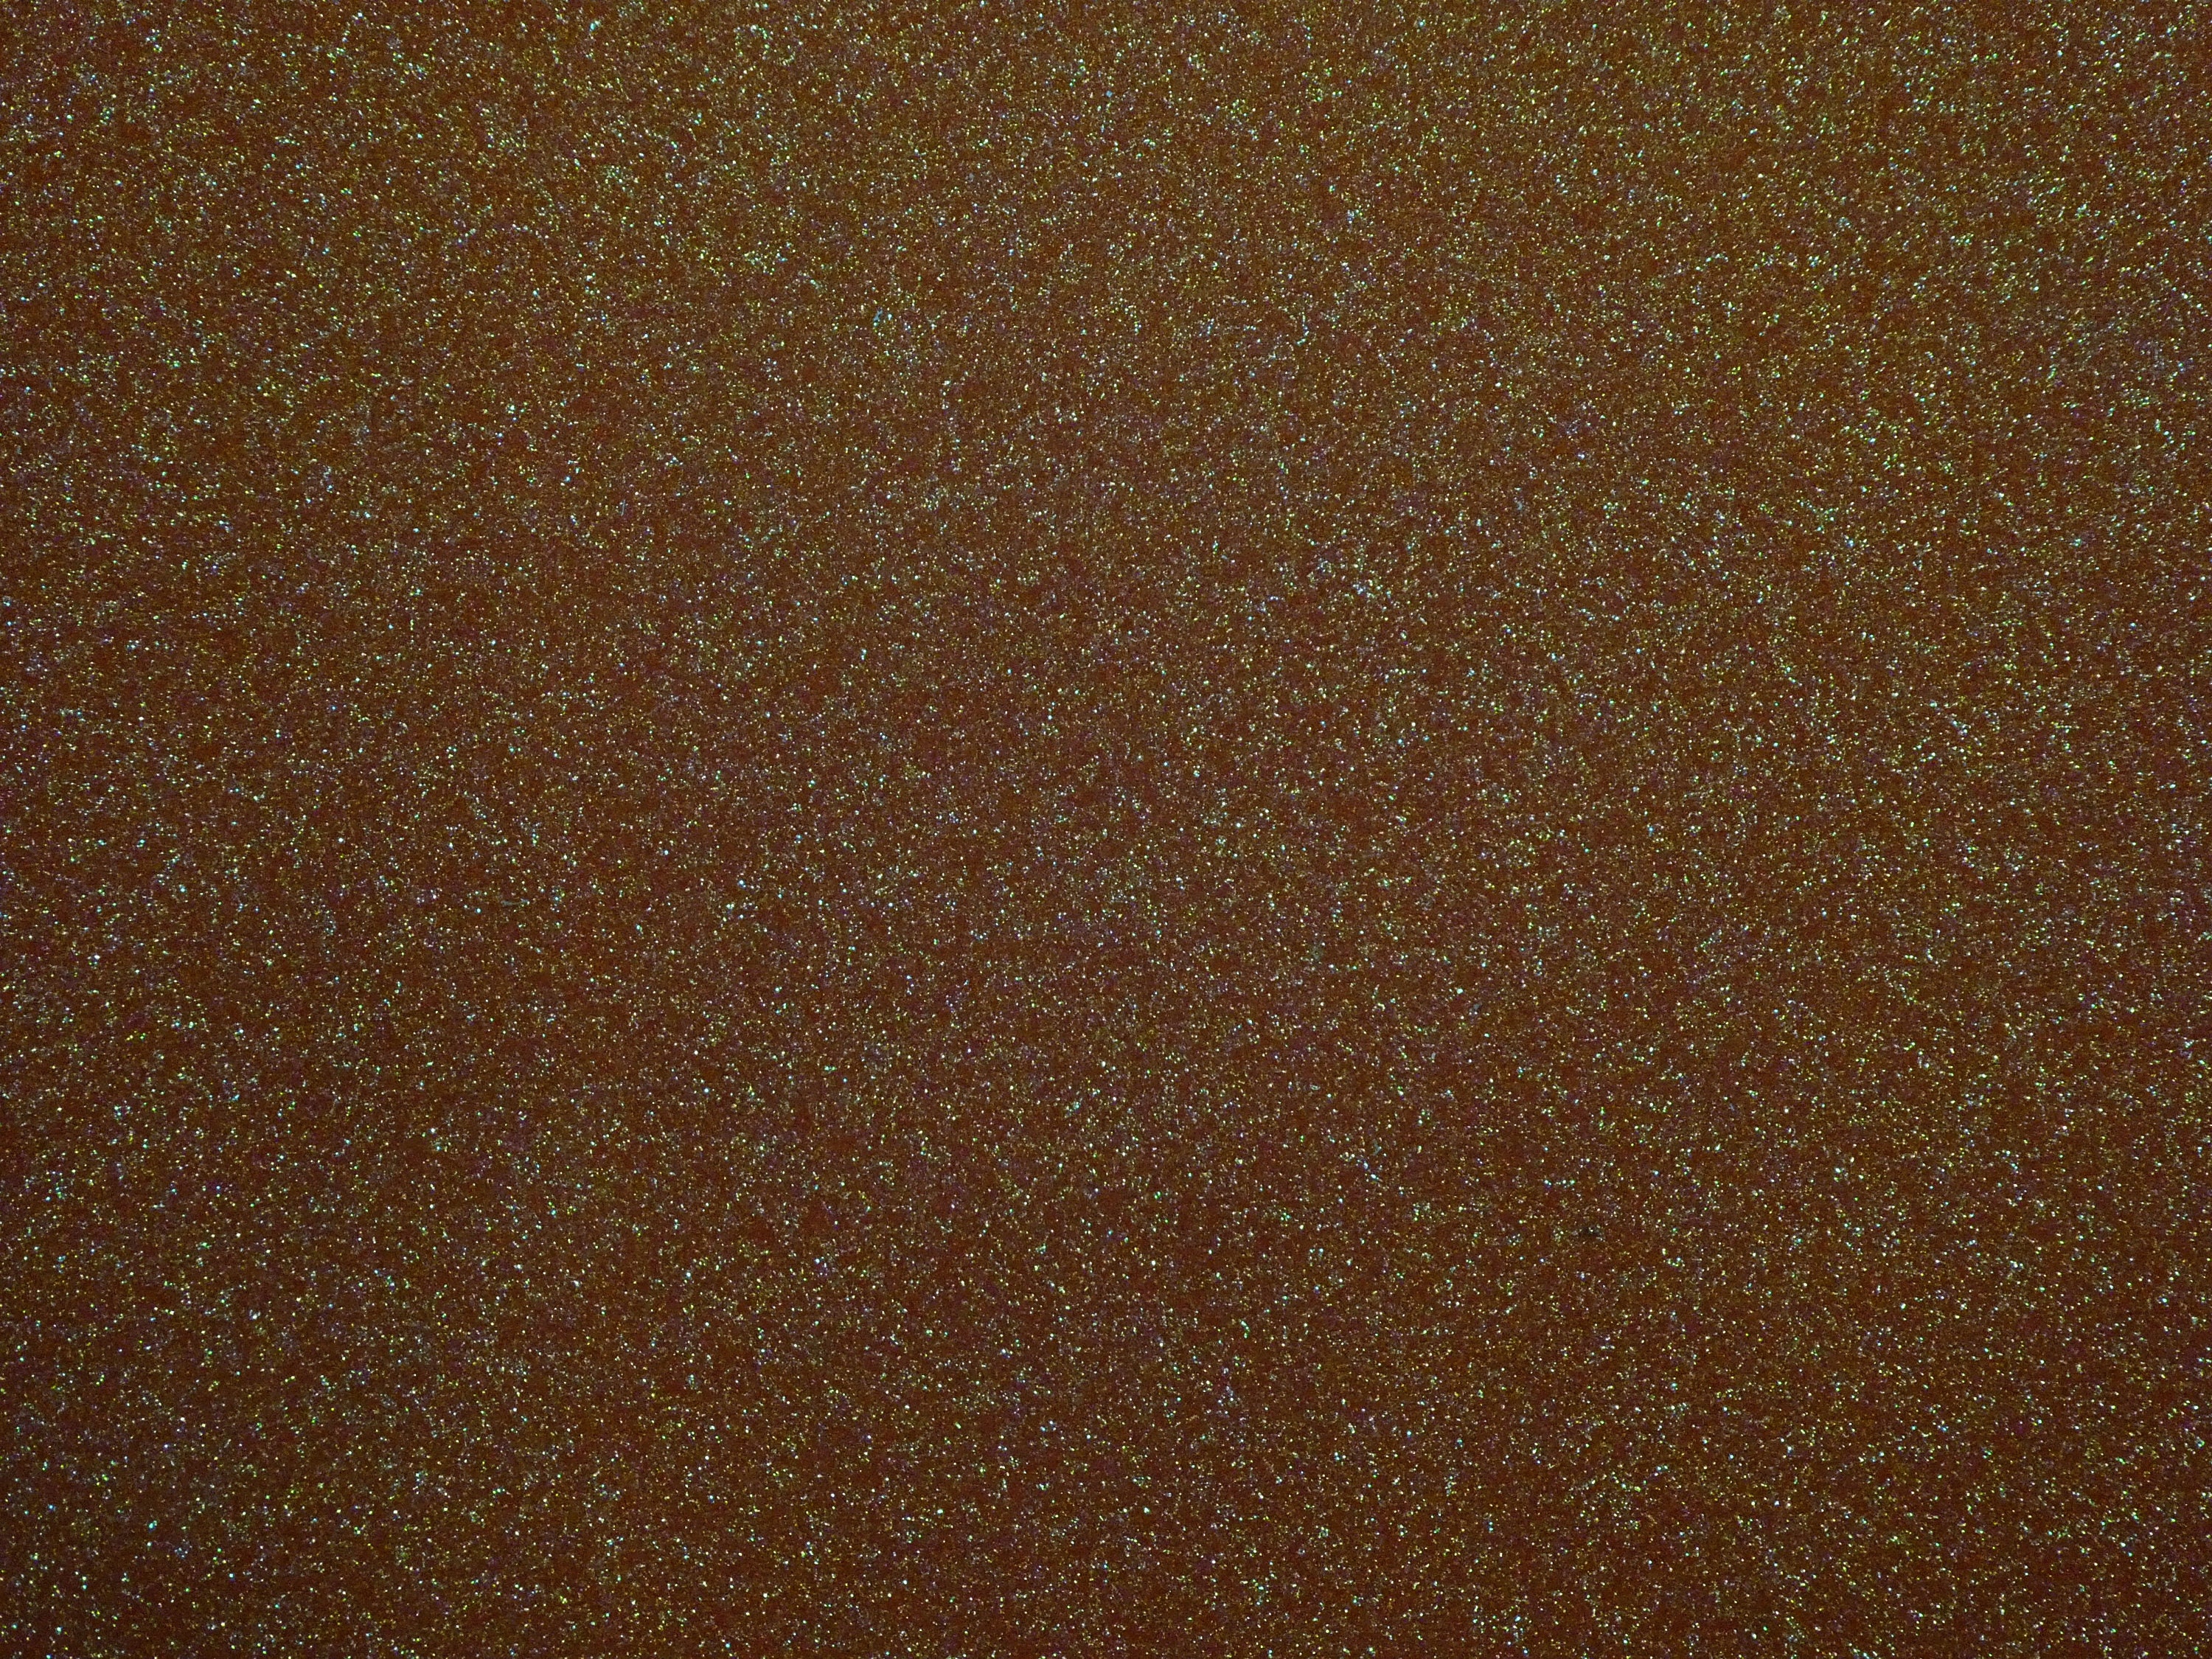 Fine GLITTER 12x12 BRILLIANT RED Fine Glitter applied to Black Leather  THiCK 5.5oz/2.2 mm PeggySueAlso E4355-36